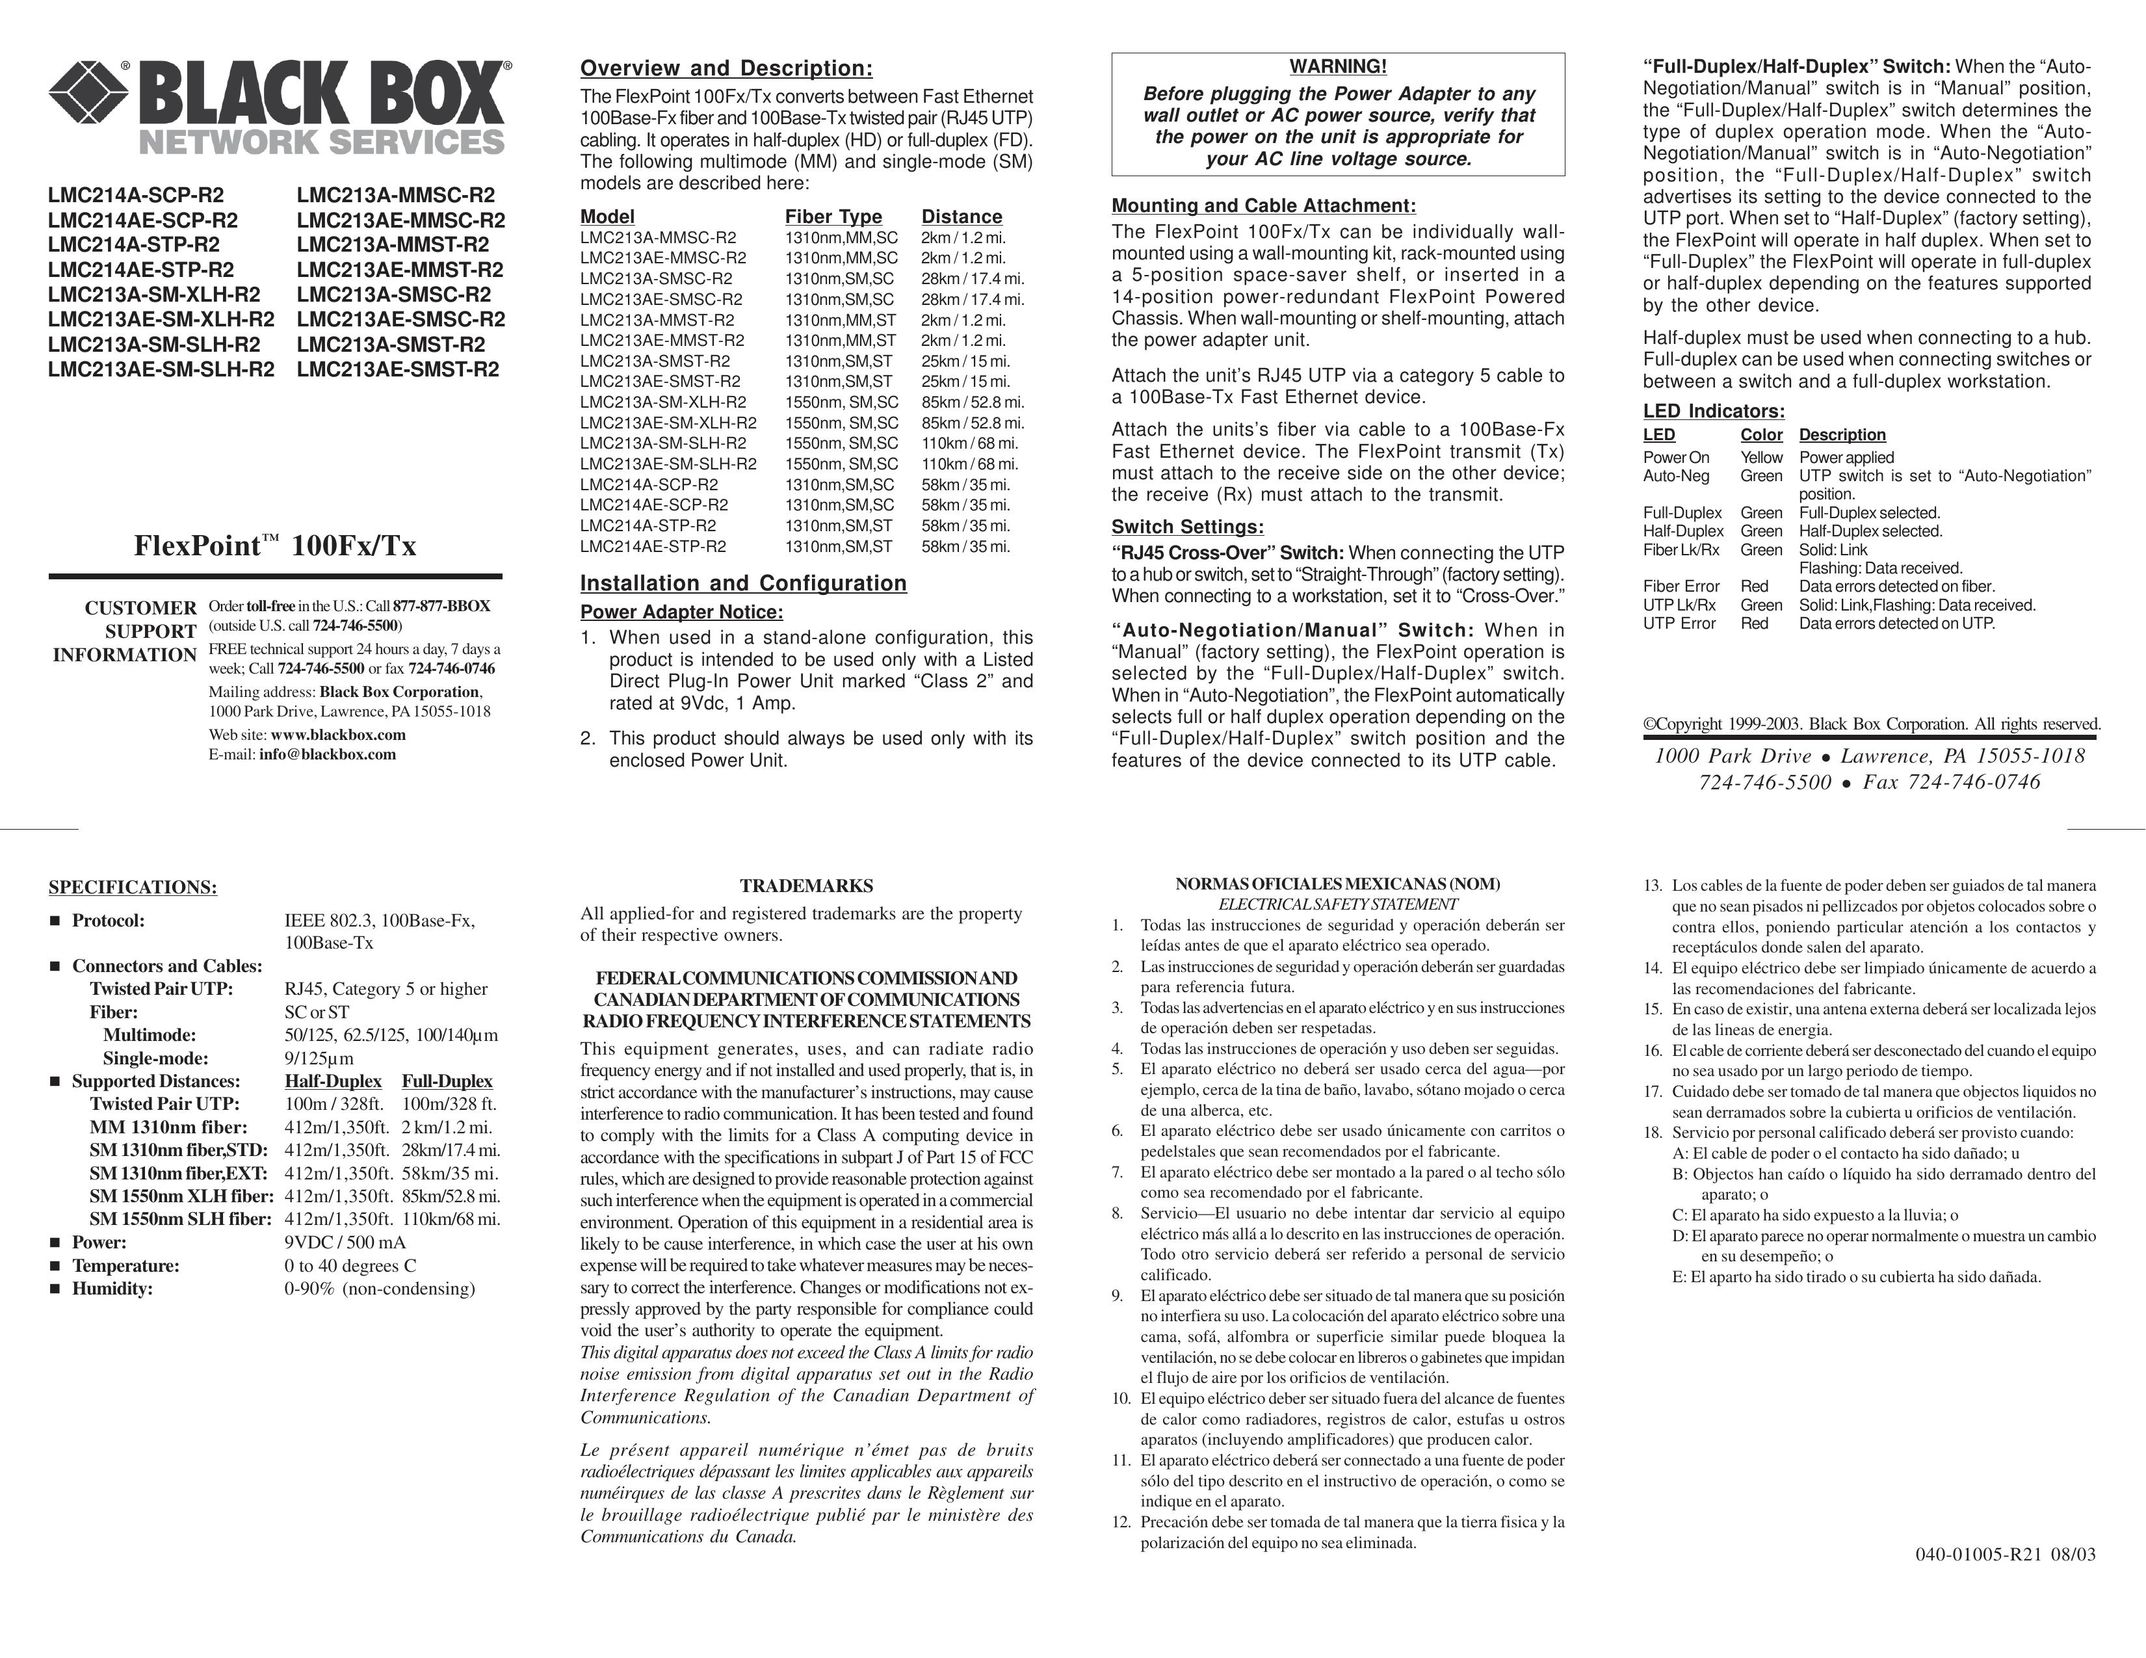 Black Box FlexPoint 100Fx/Tx Power Supply User Manual